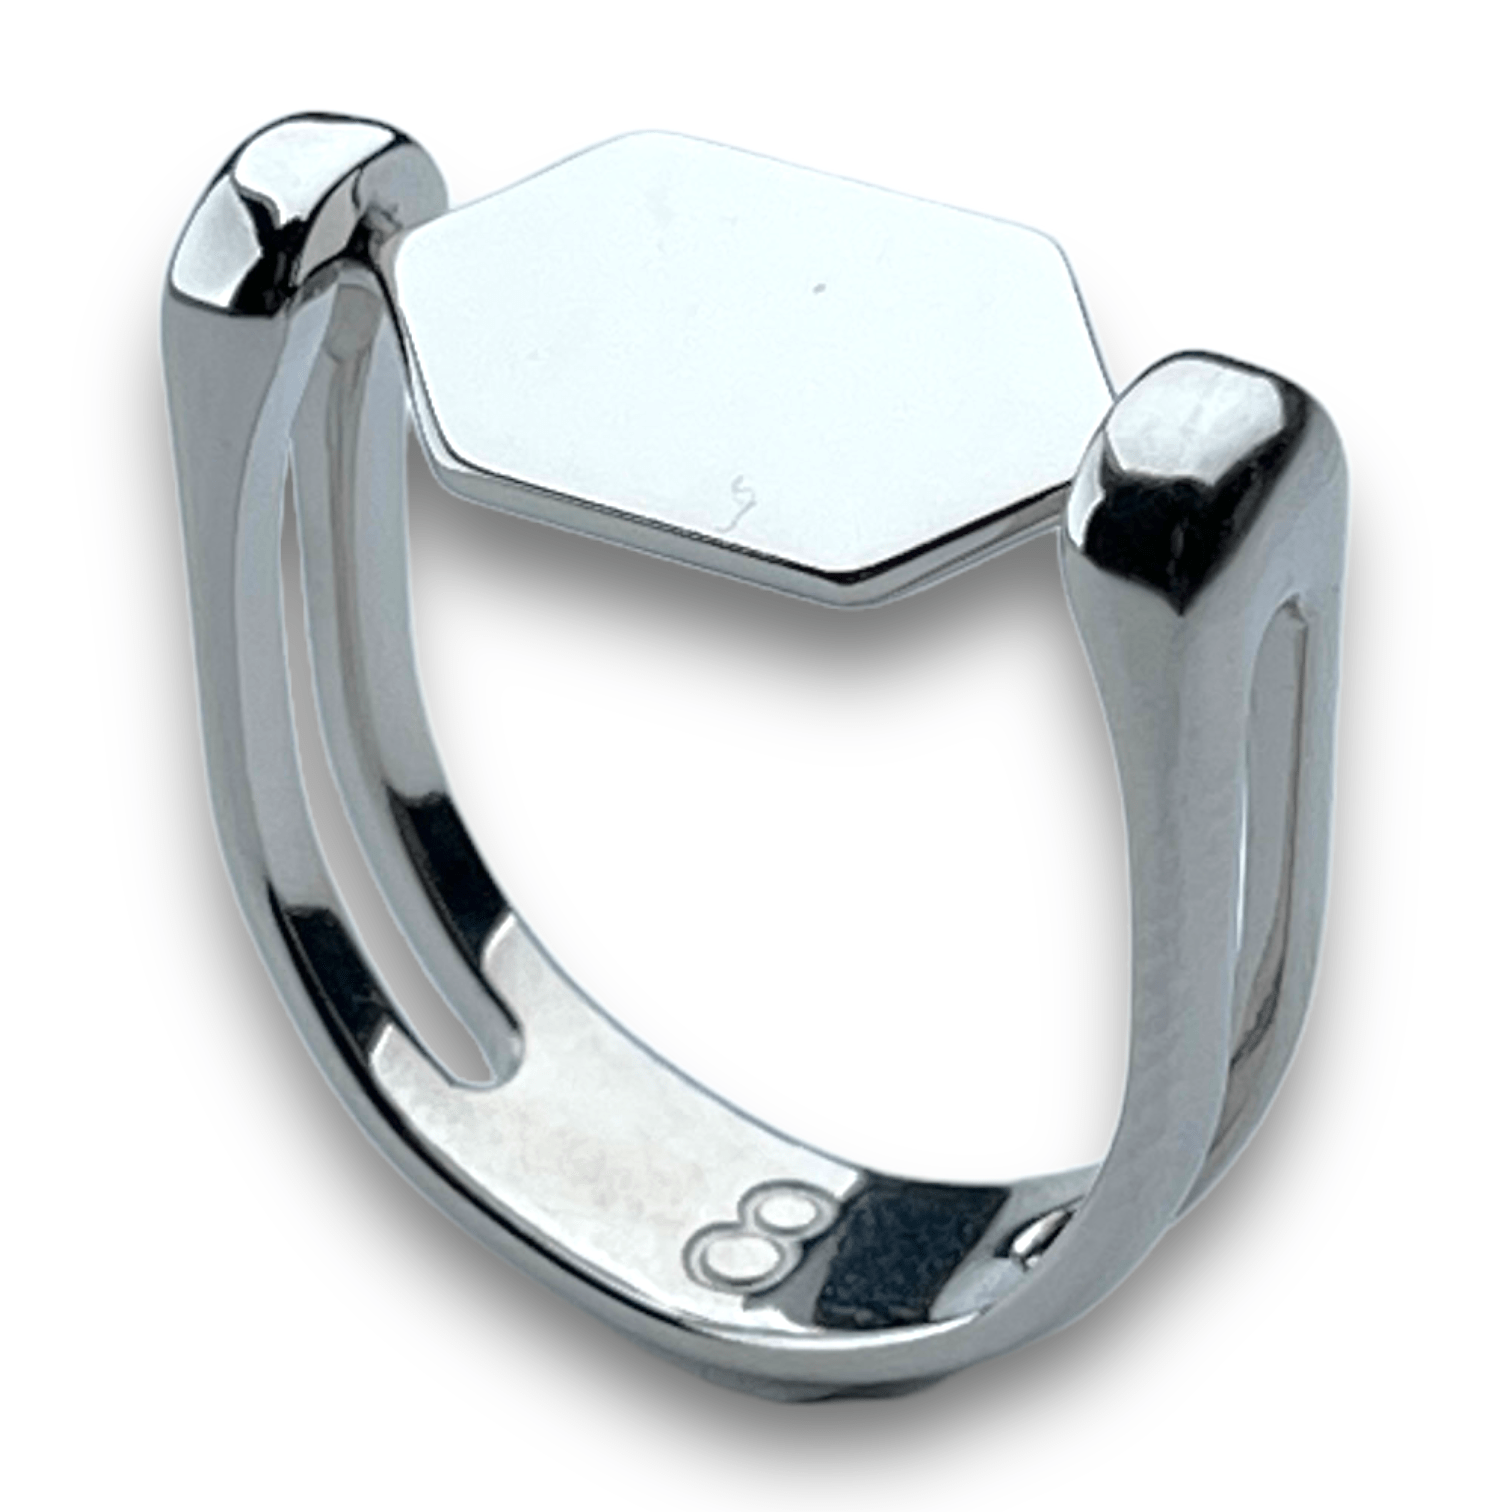 Hexbar-Shaped Fidget Ring – CONQUERing